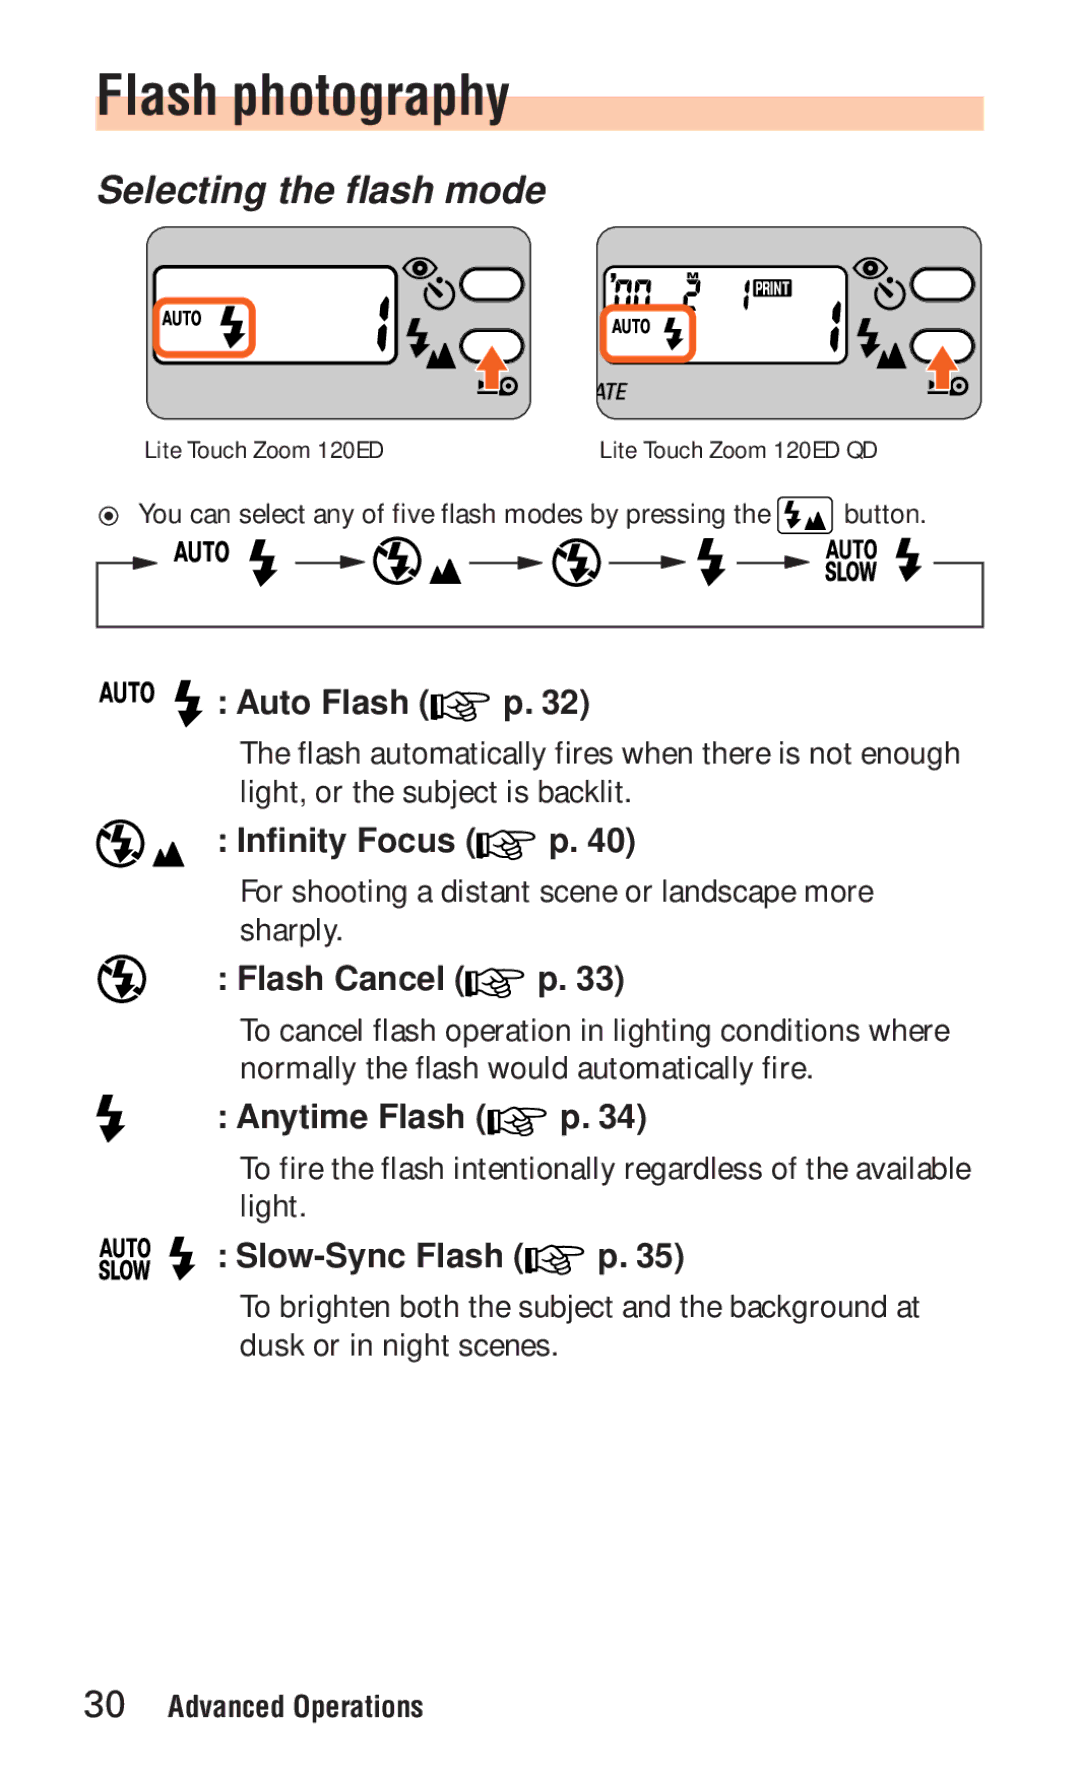 Nikon ED 120 instruction manual Flash photography, Selecting the flash mode 